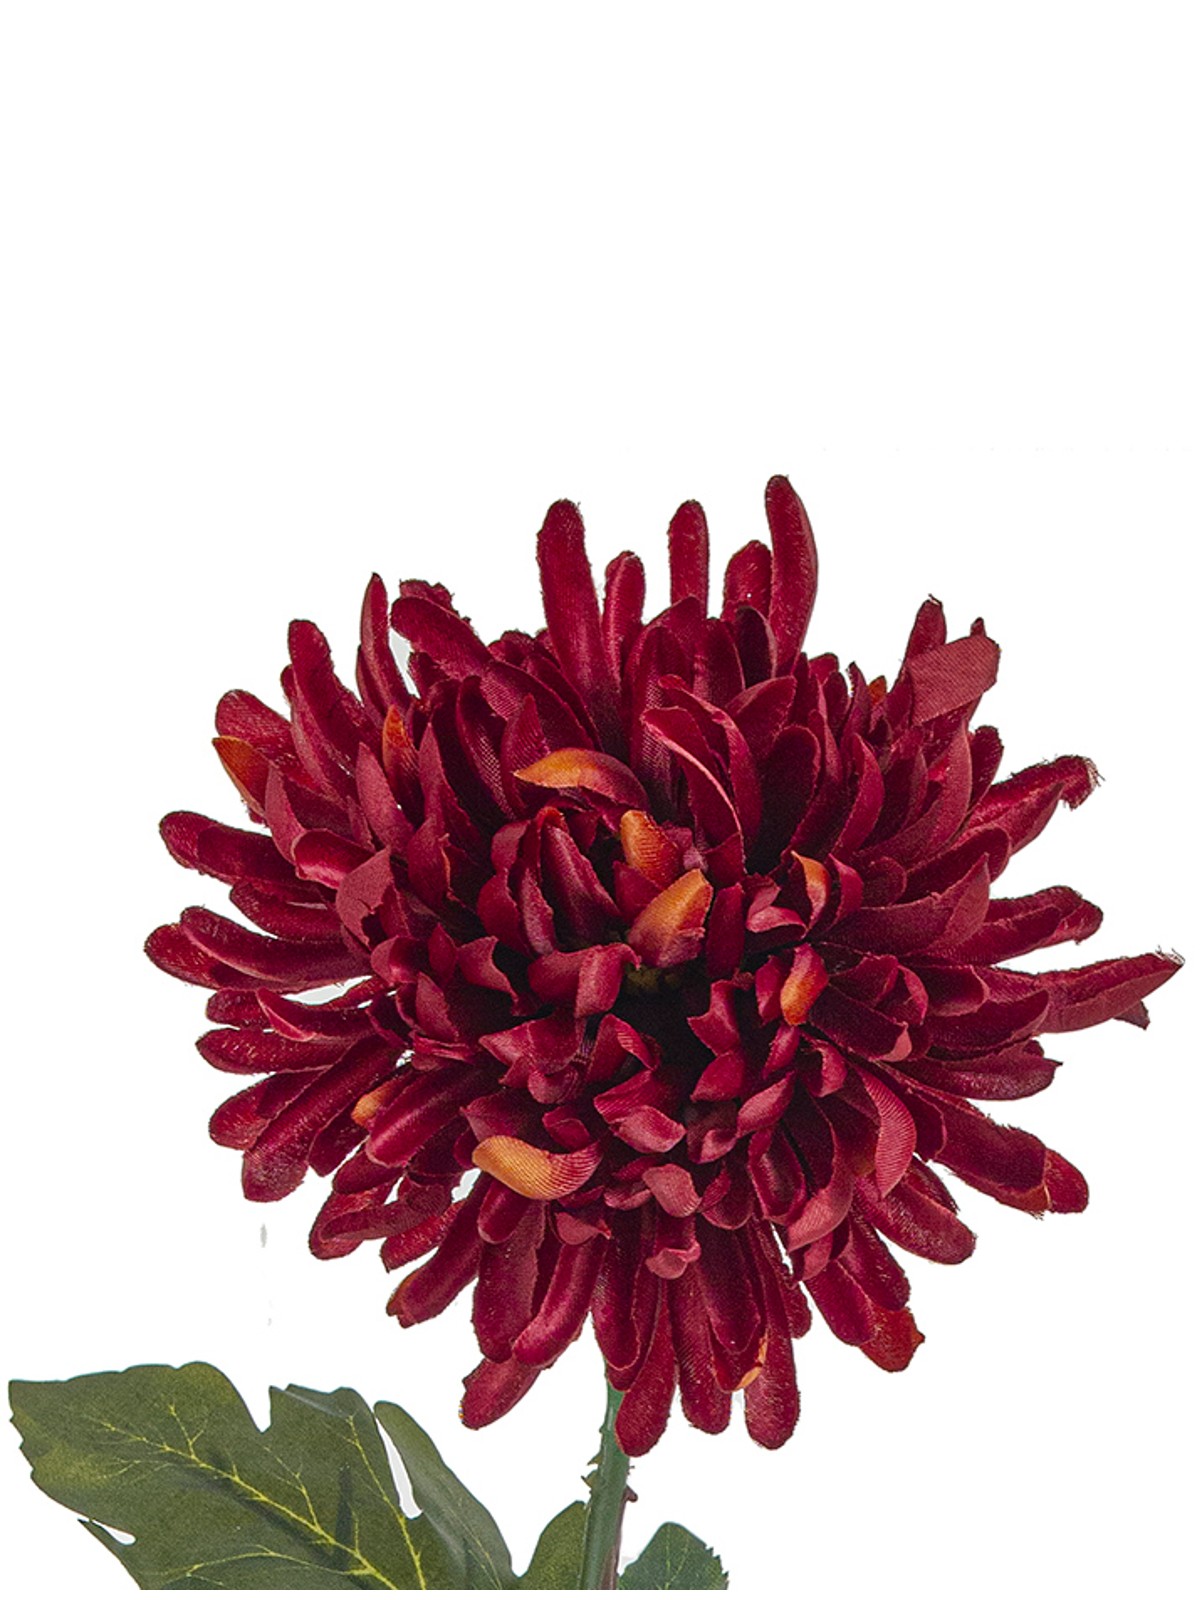 Burgundy chrysanthemum